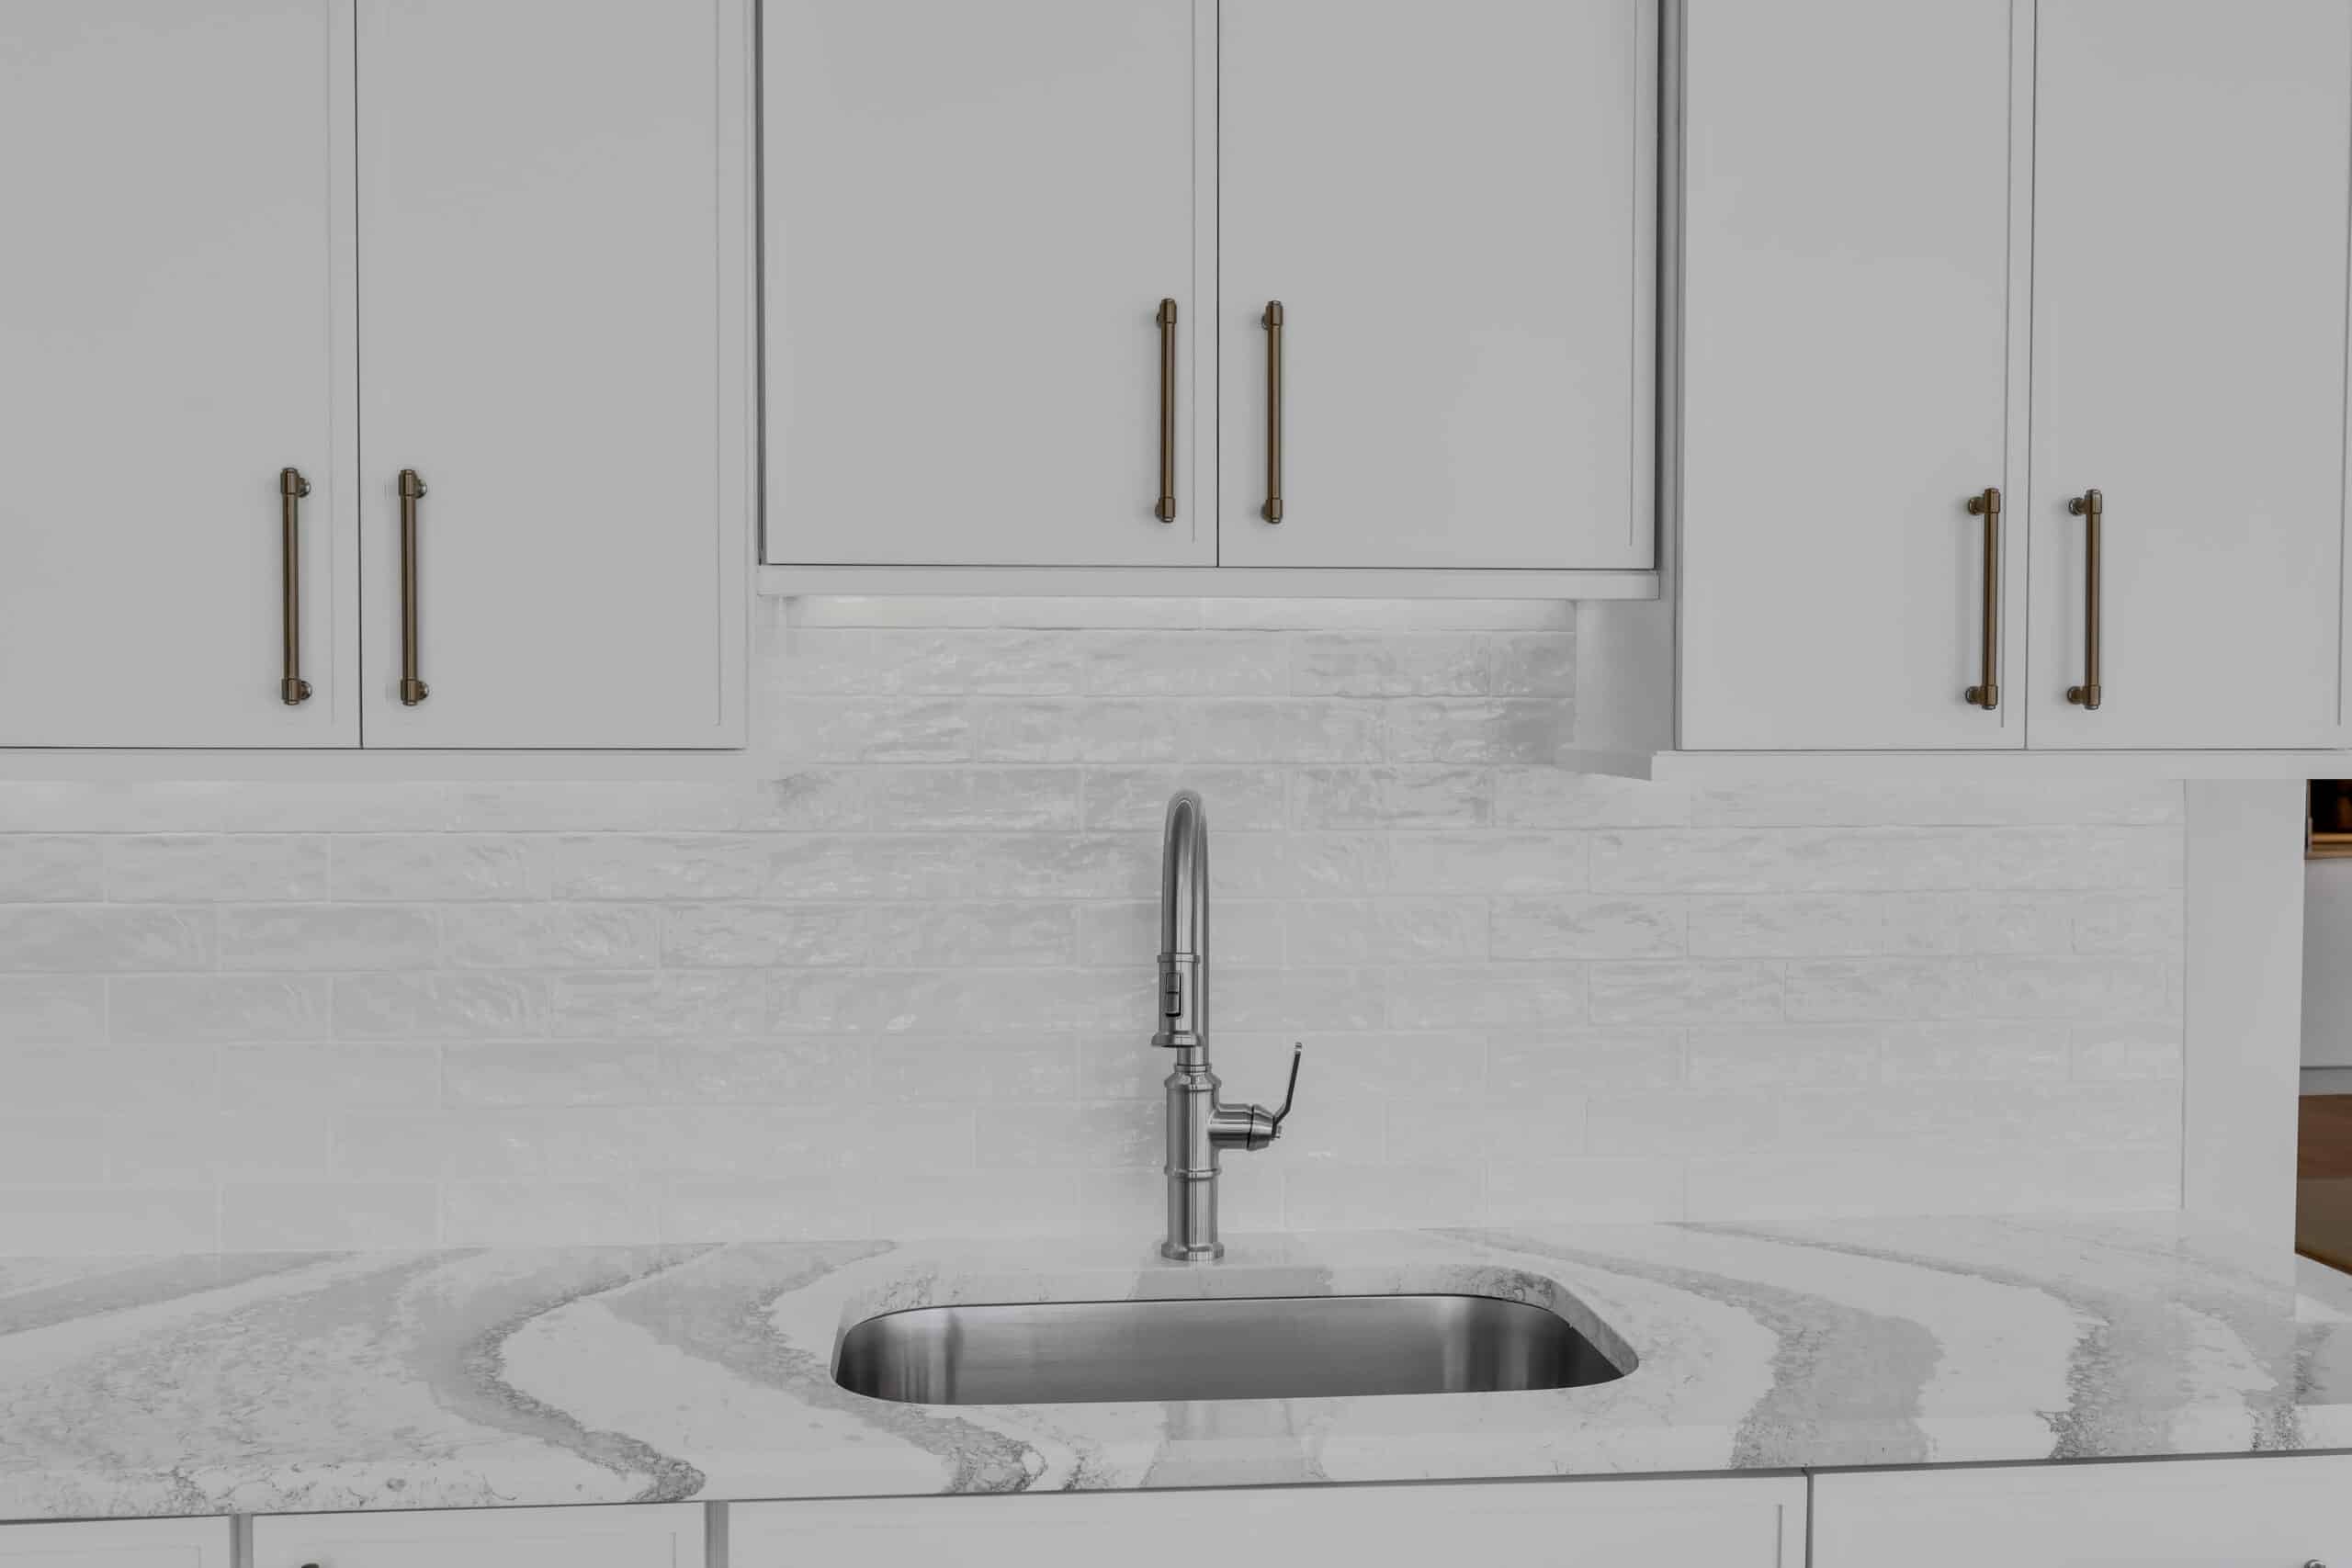 Minimalist sink and faucet on white quartz countertop